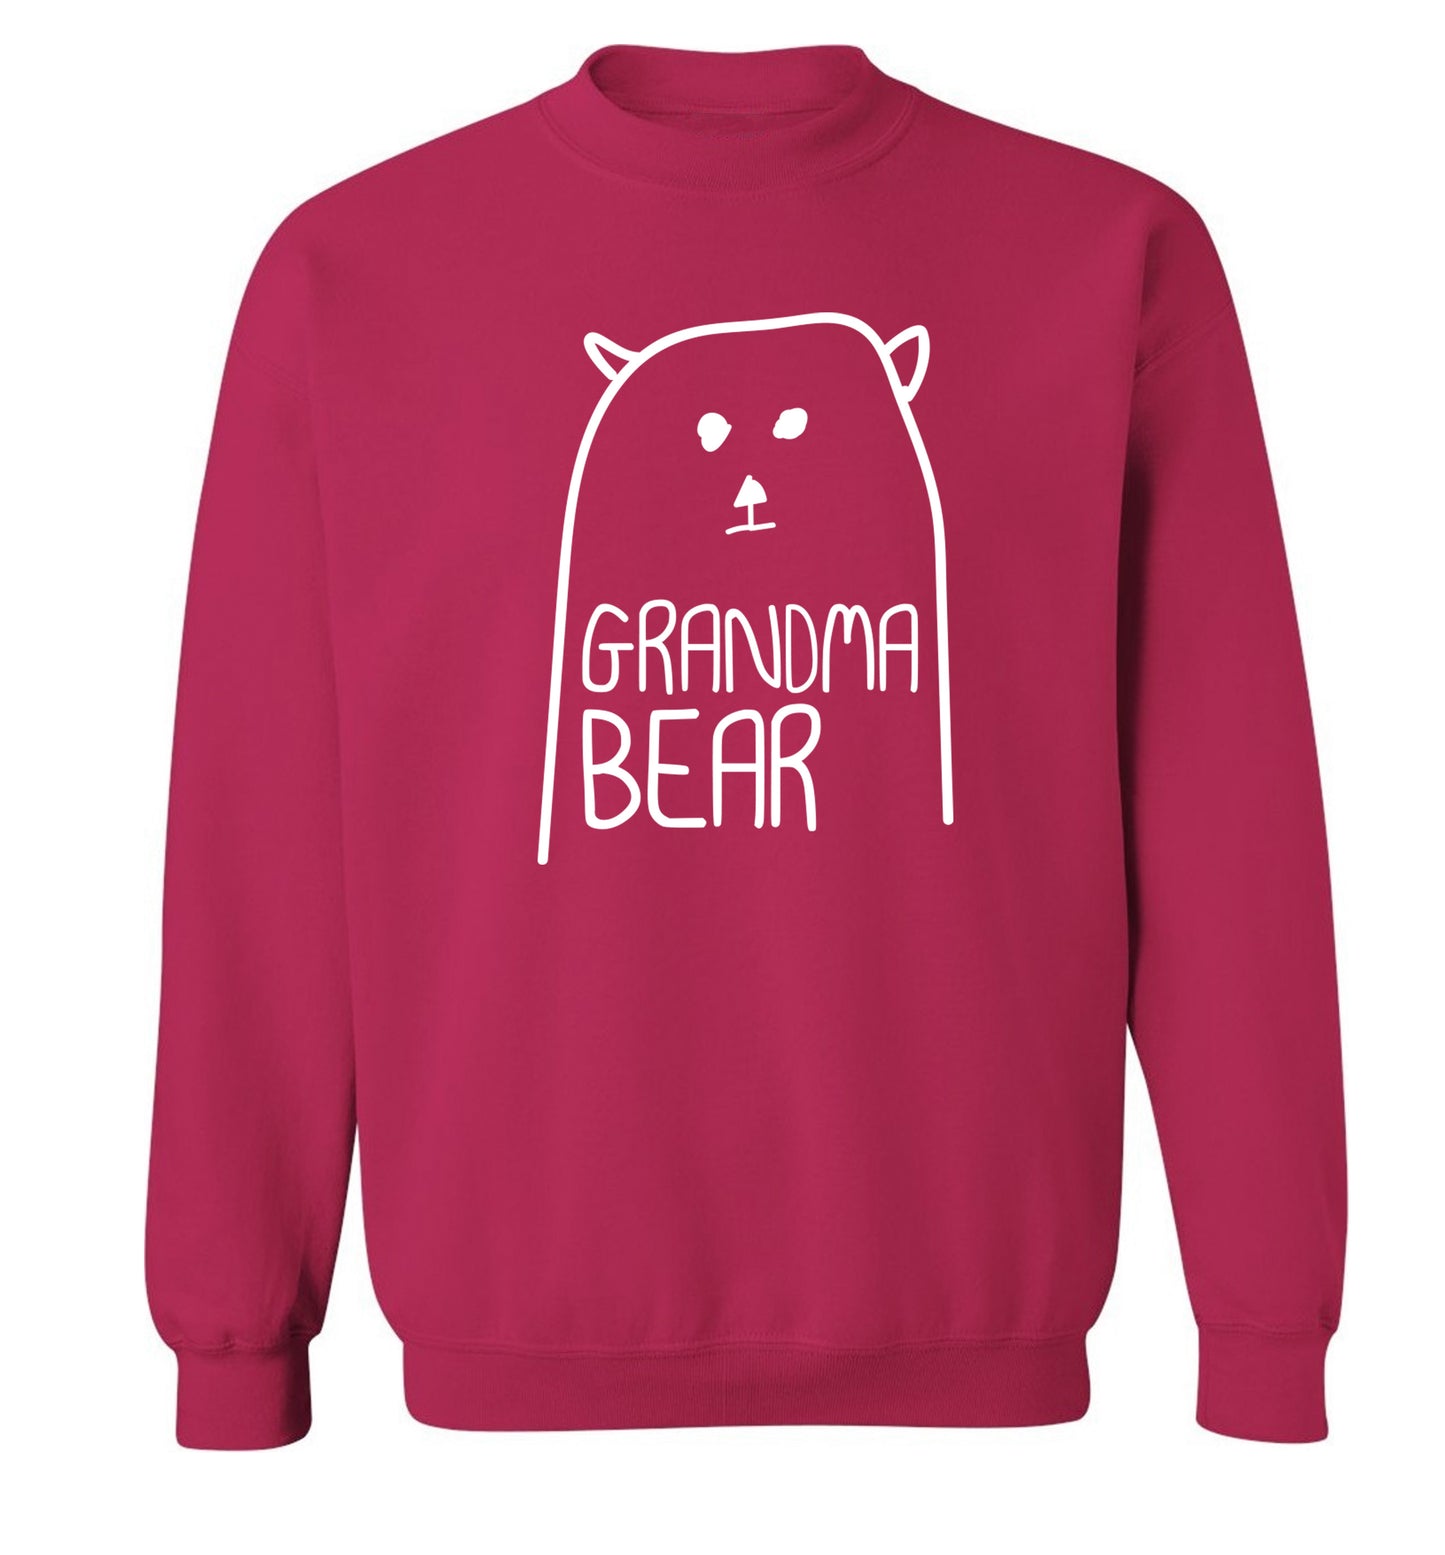 Grandma bear Adult's unisex pink Sweater 2XL